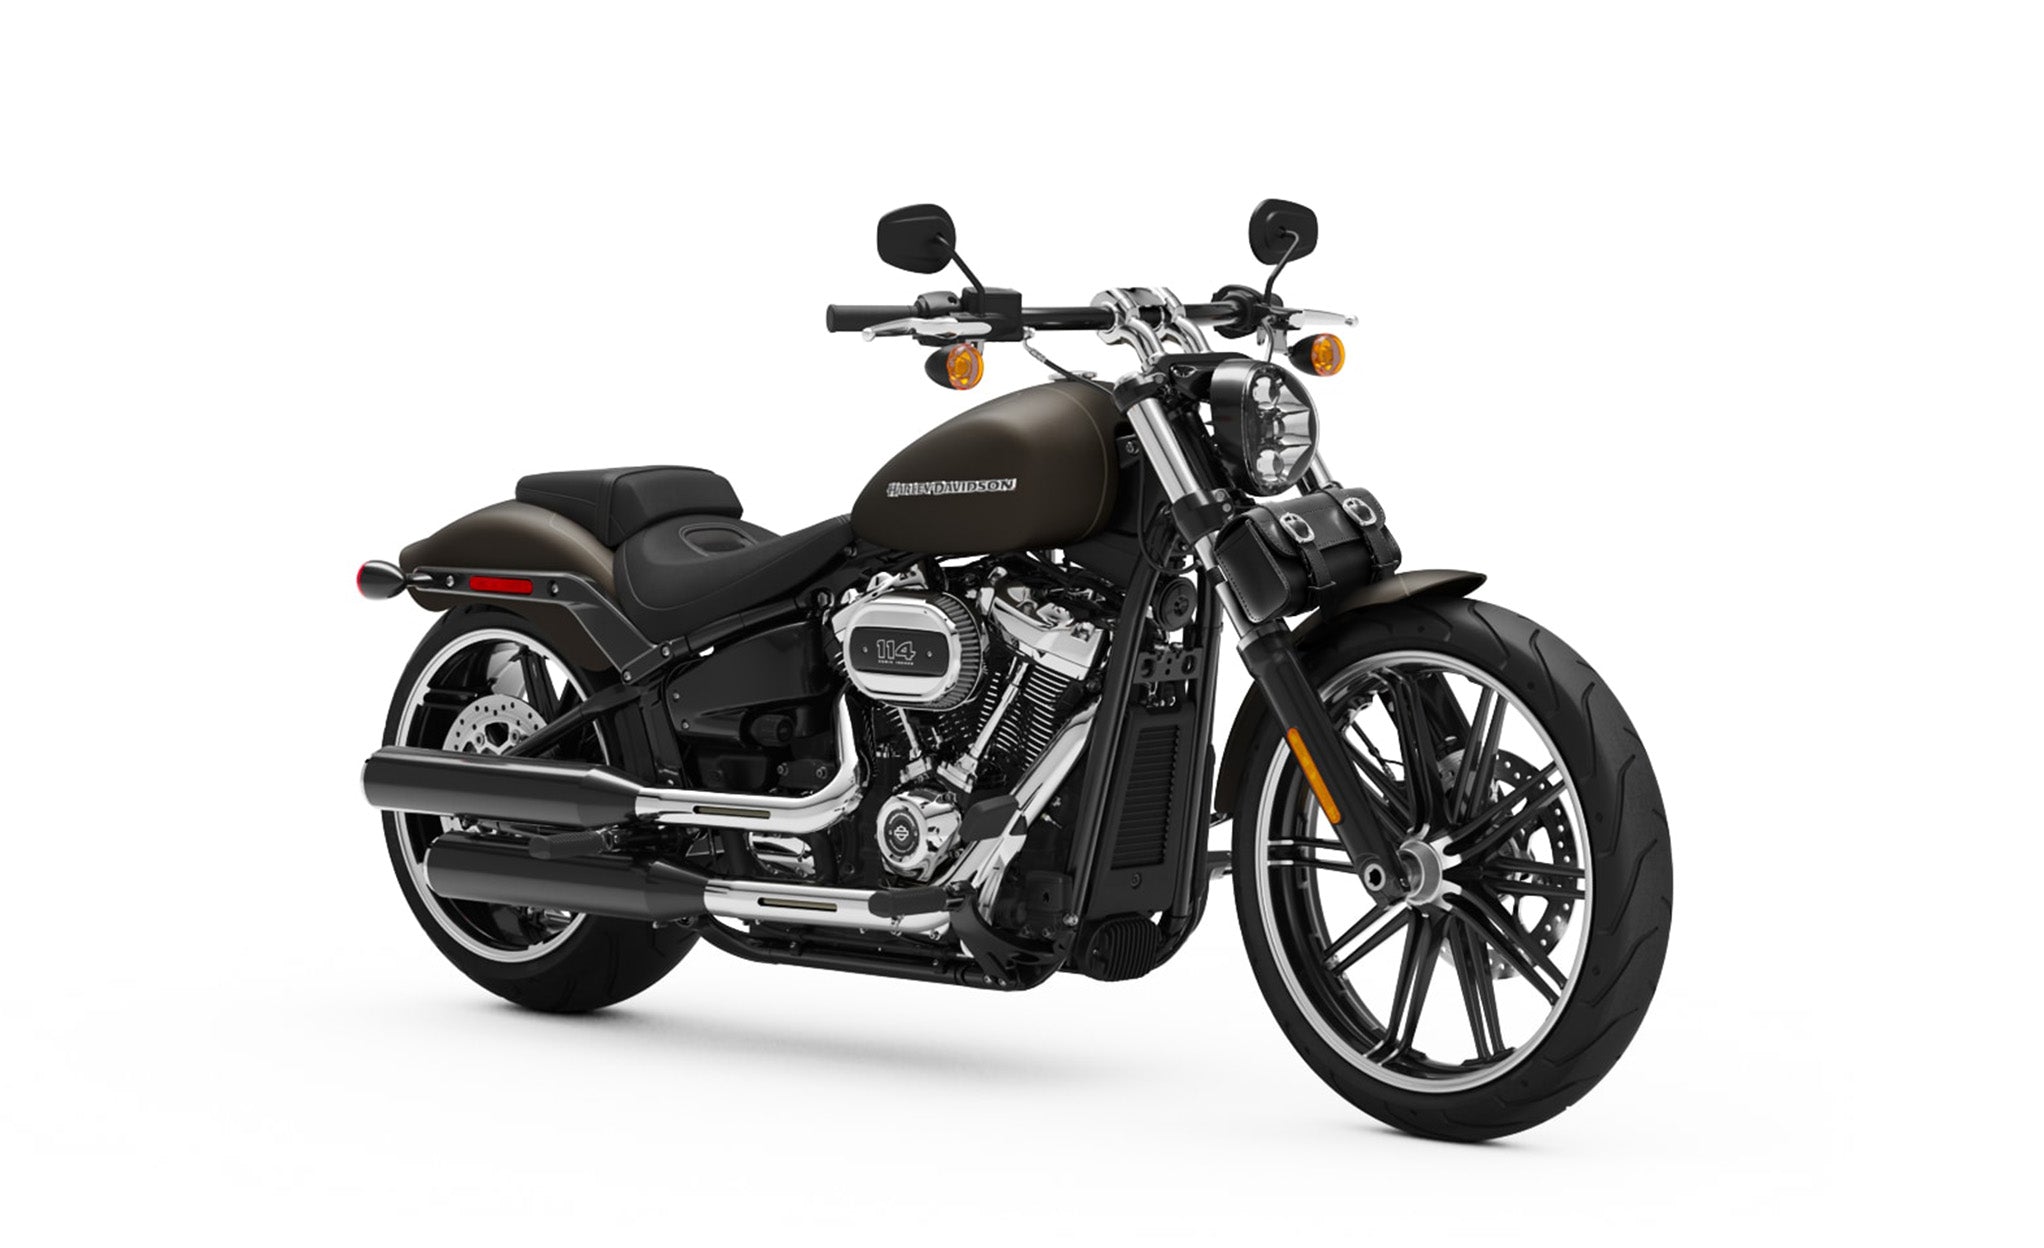 Viking Armor Plain Leather Motorcycle Tool Bag for Harley Davidson Bag on Bike View @expand